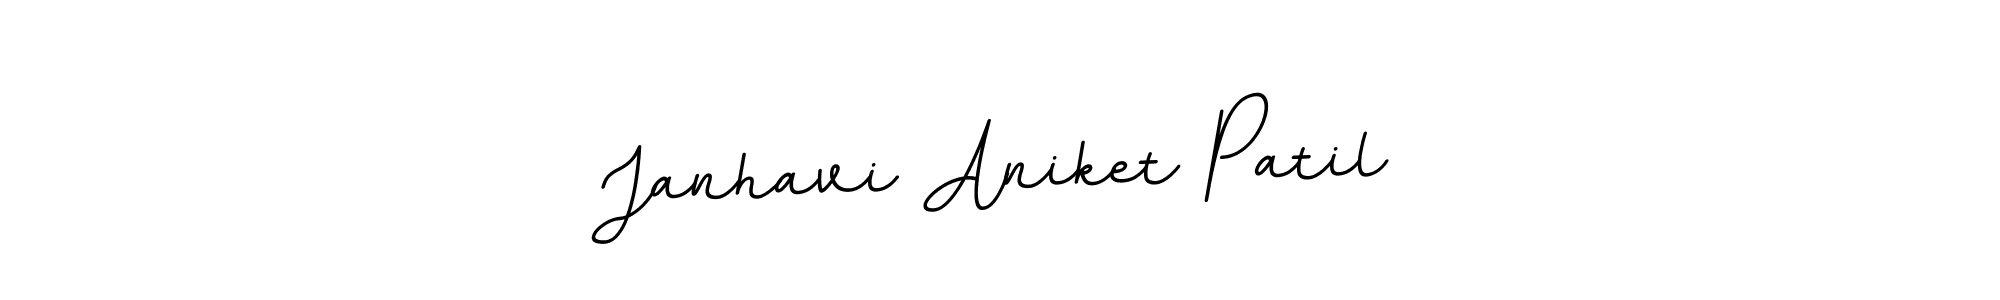 How to Draw Janhavi Aniket Patil signature style? BallpointsItalic-DORy9 is a latest design signature styles for name Janhavi Aniket Patil. Janhavi Aniket Patil signature style 11 images and pictures png